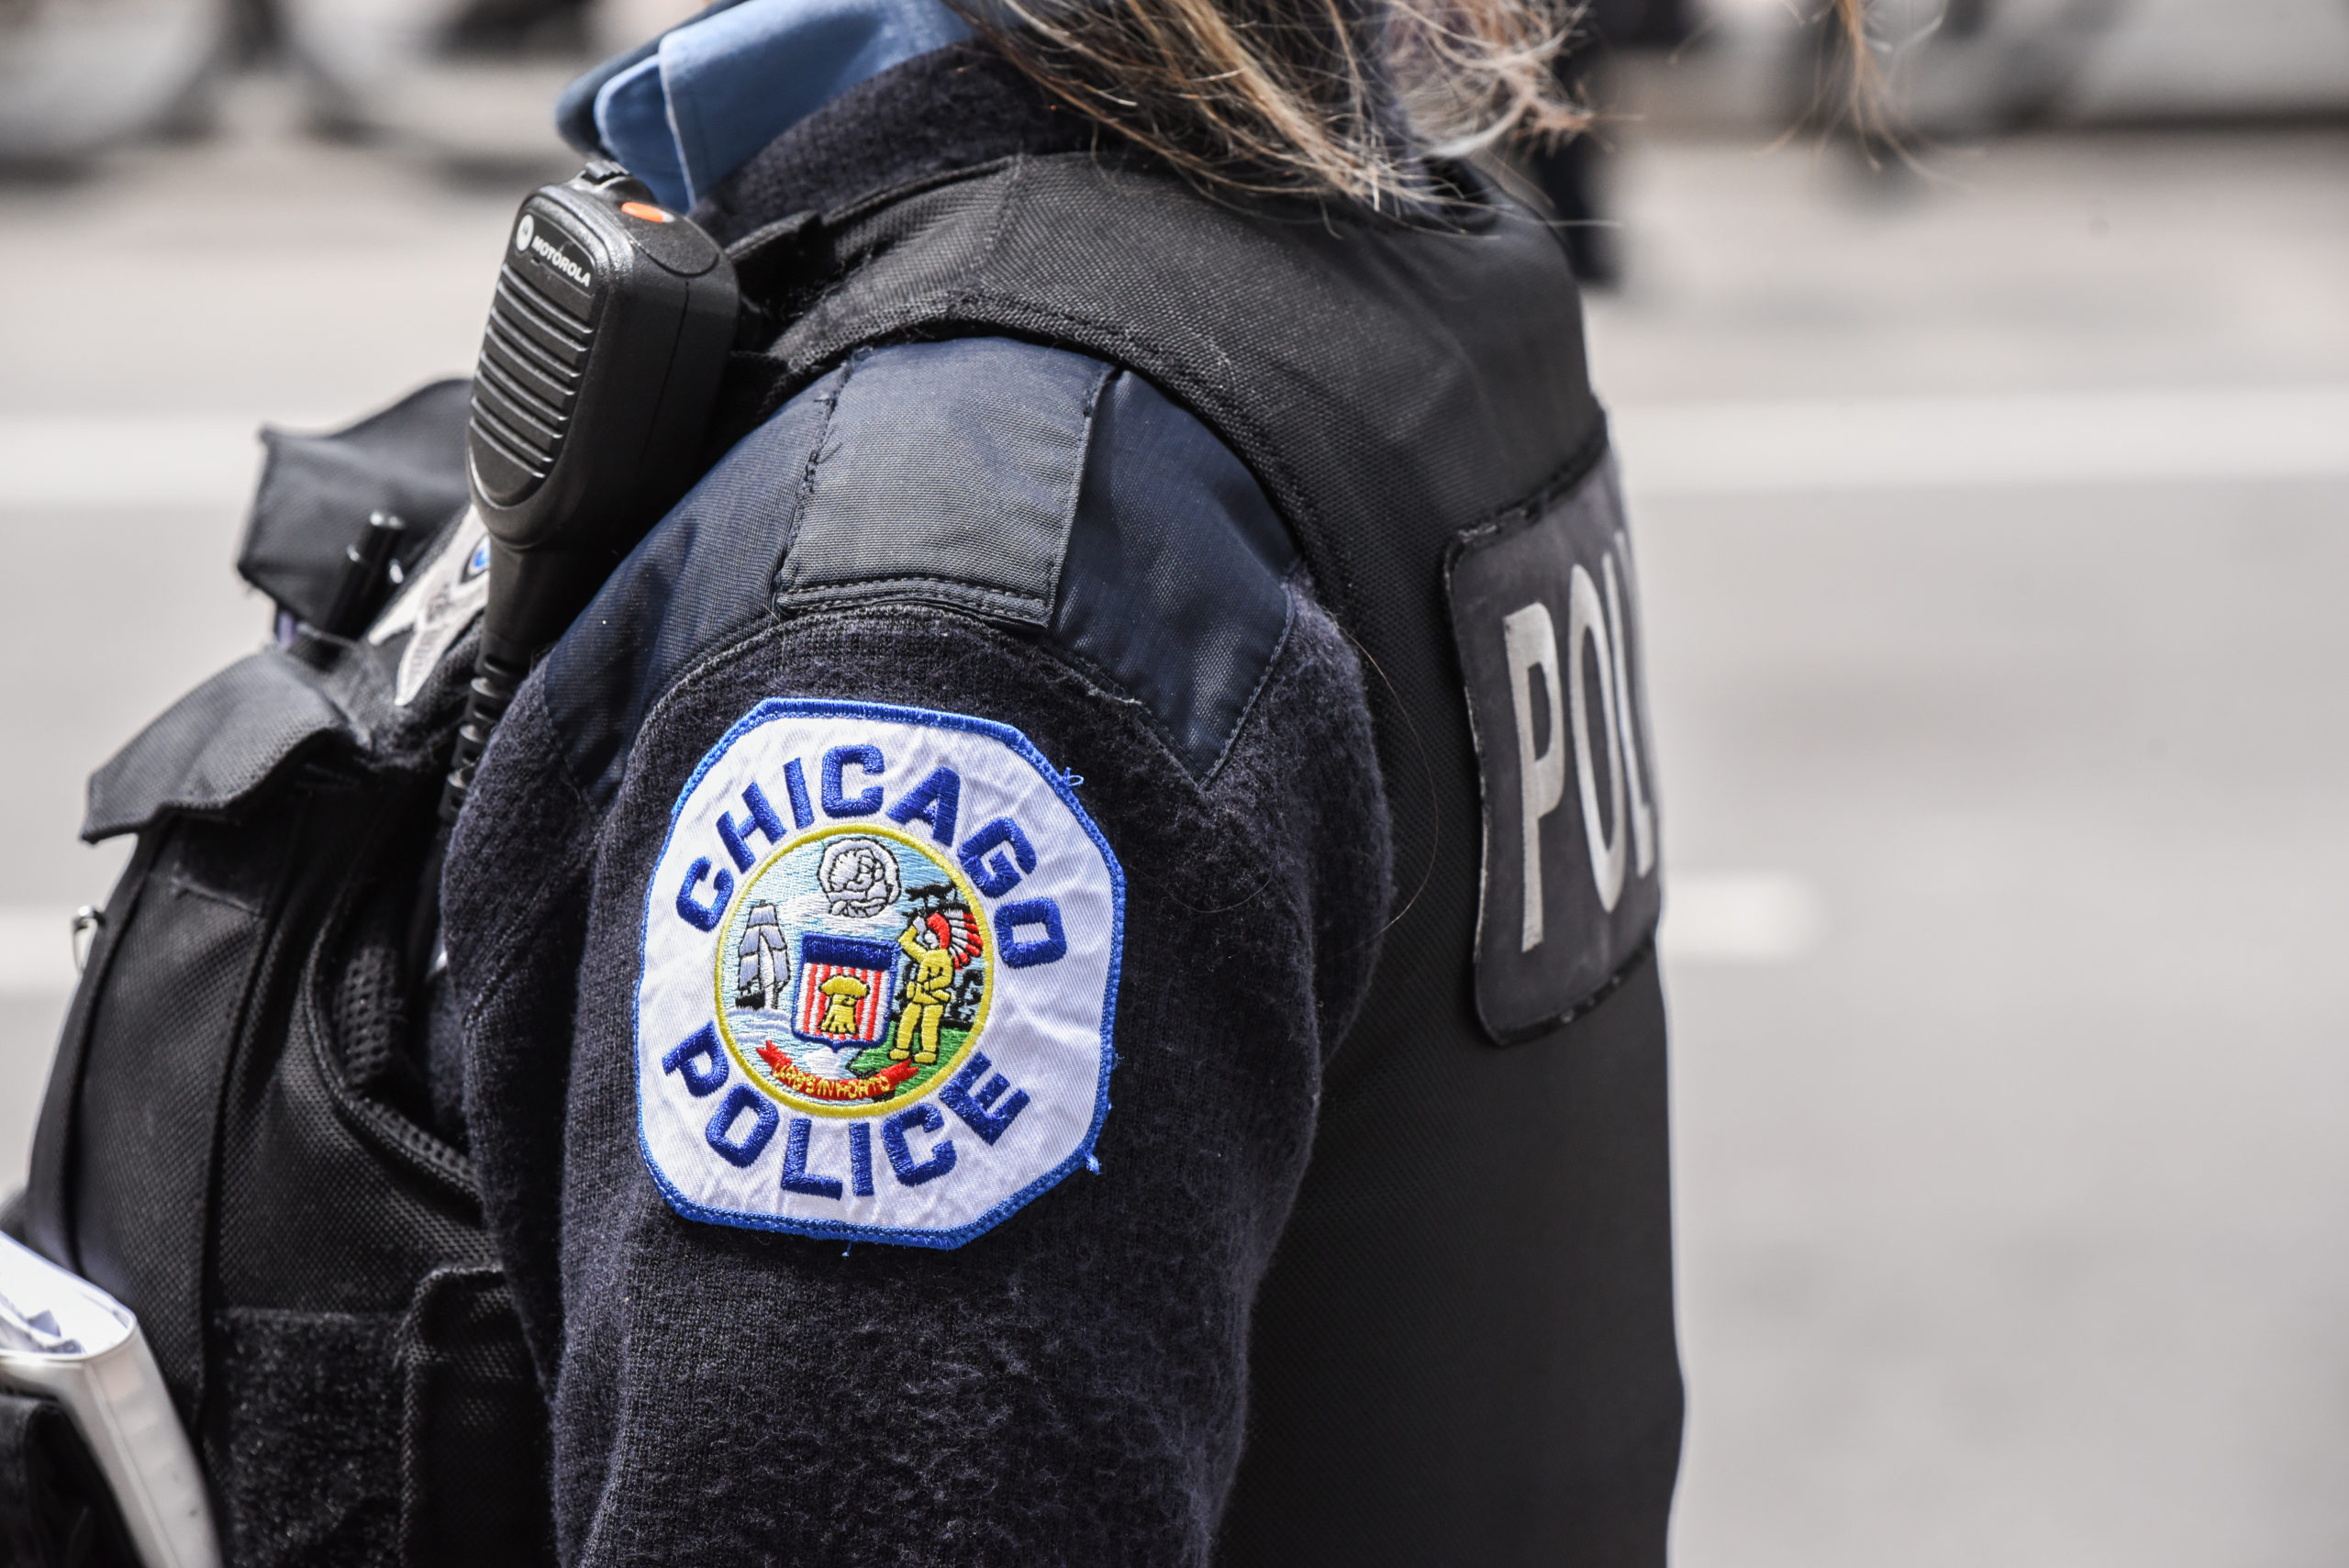 Chicago, Illinois Police Officer [Kevin Kipper/Shutterstock]